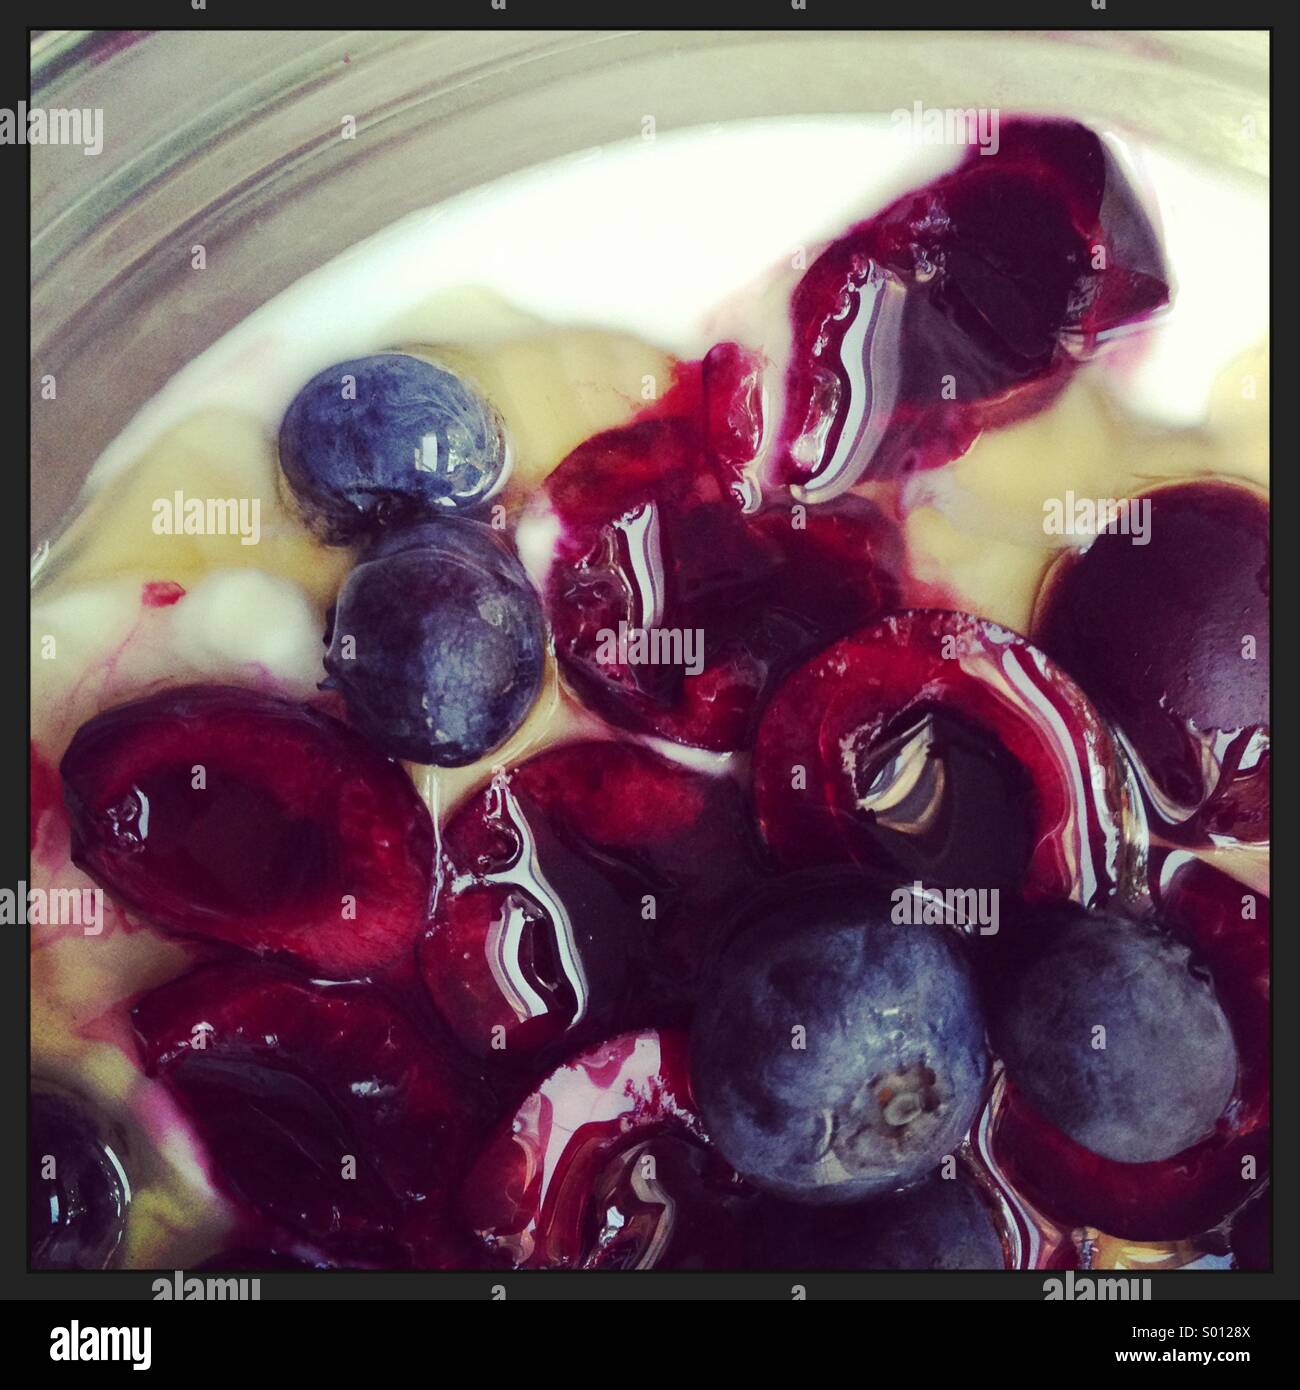 Yogurt with fruits Stock Photo